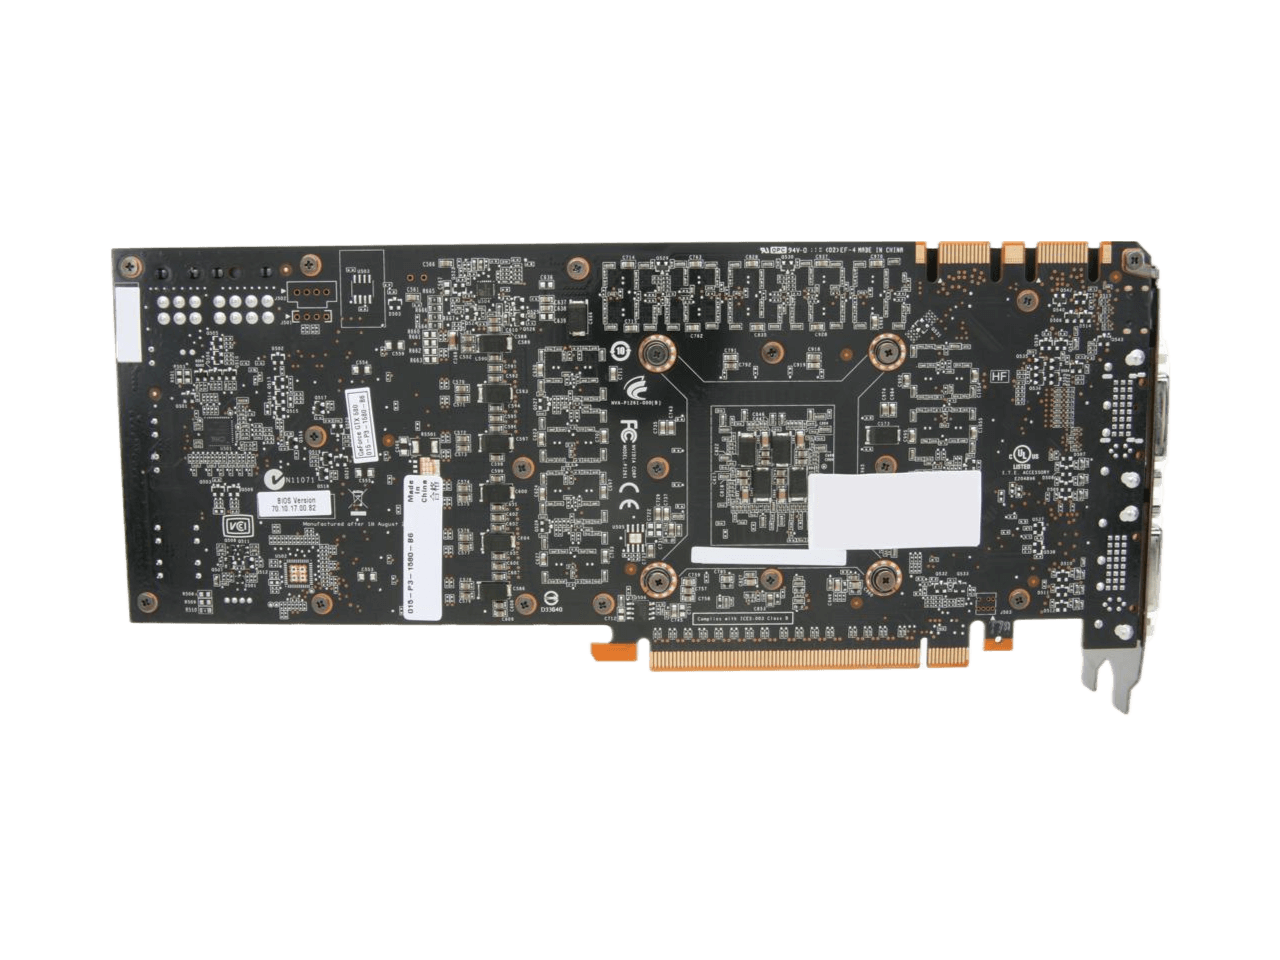 EVGA GeForce GTX 580 DirectX 11 1536MB 384-Bit GDDR5 PCI Express 2.0 x16 HDCP Ready SLI Support Video Card 015-P3-1580-TR